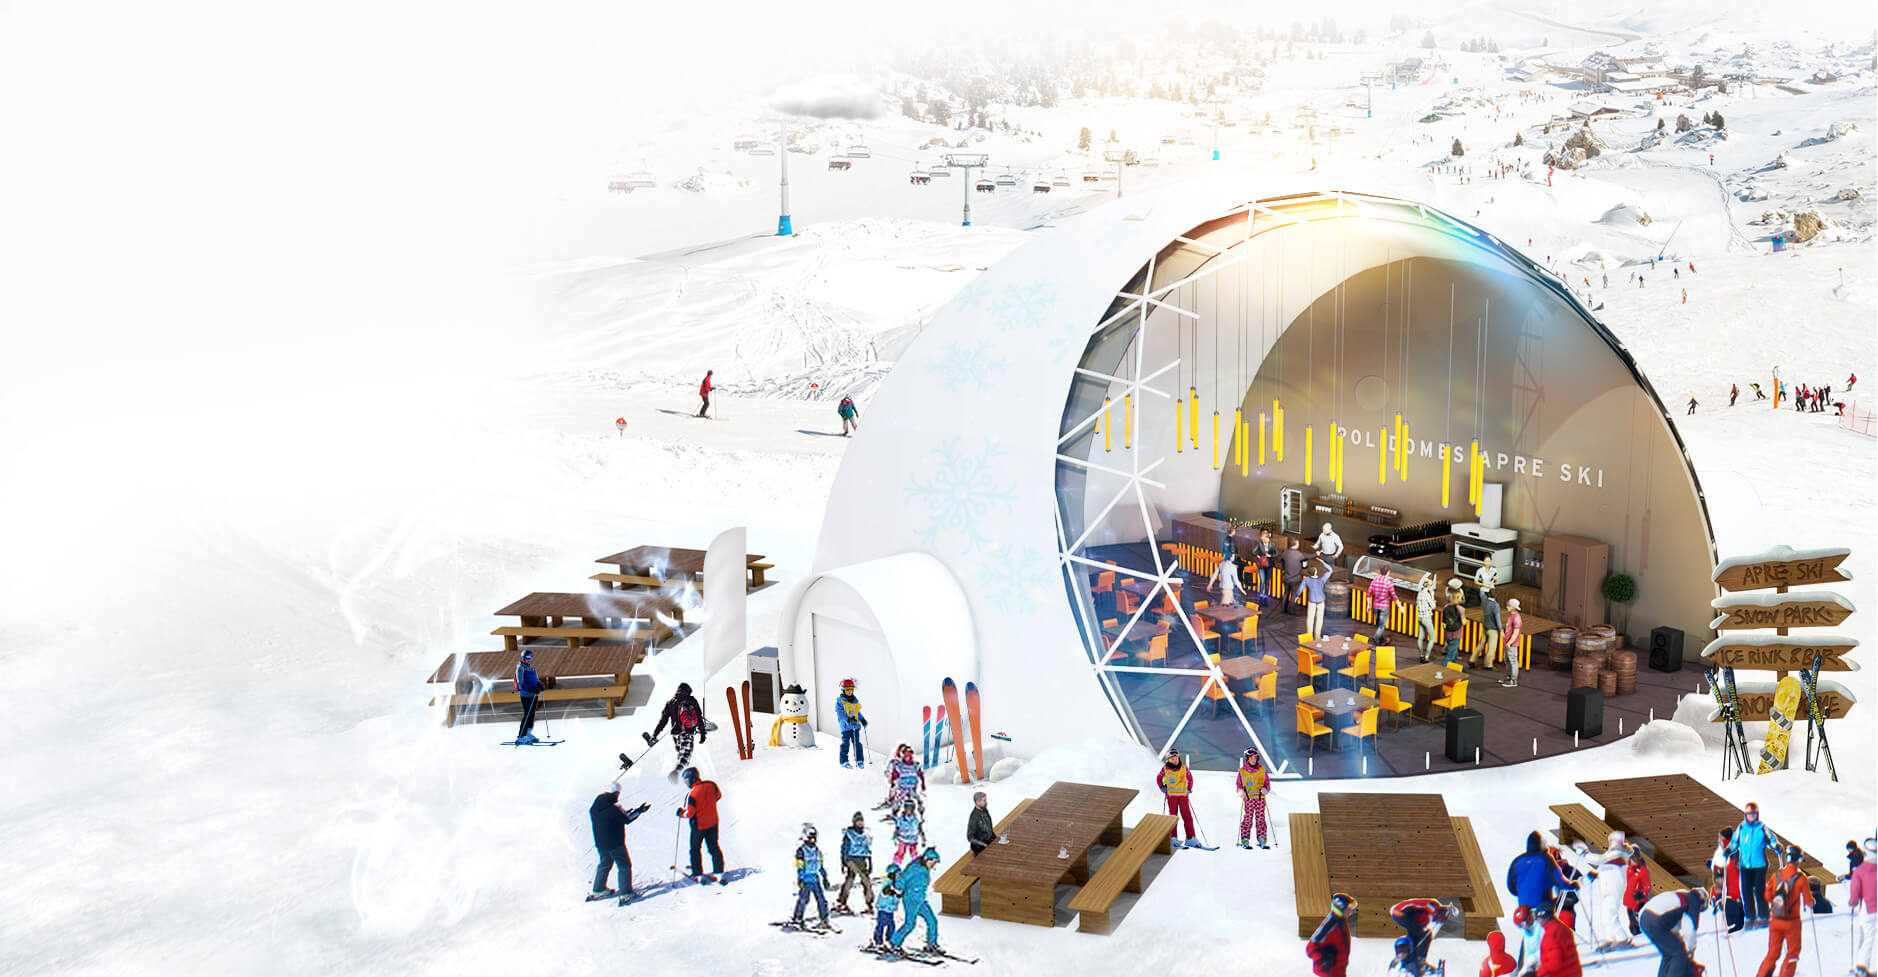 Hospitality Apre Ski - ski resort in a geodesic tent like modern igloo for winter fun and relaxation